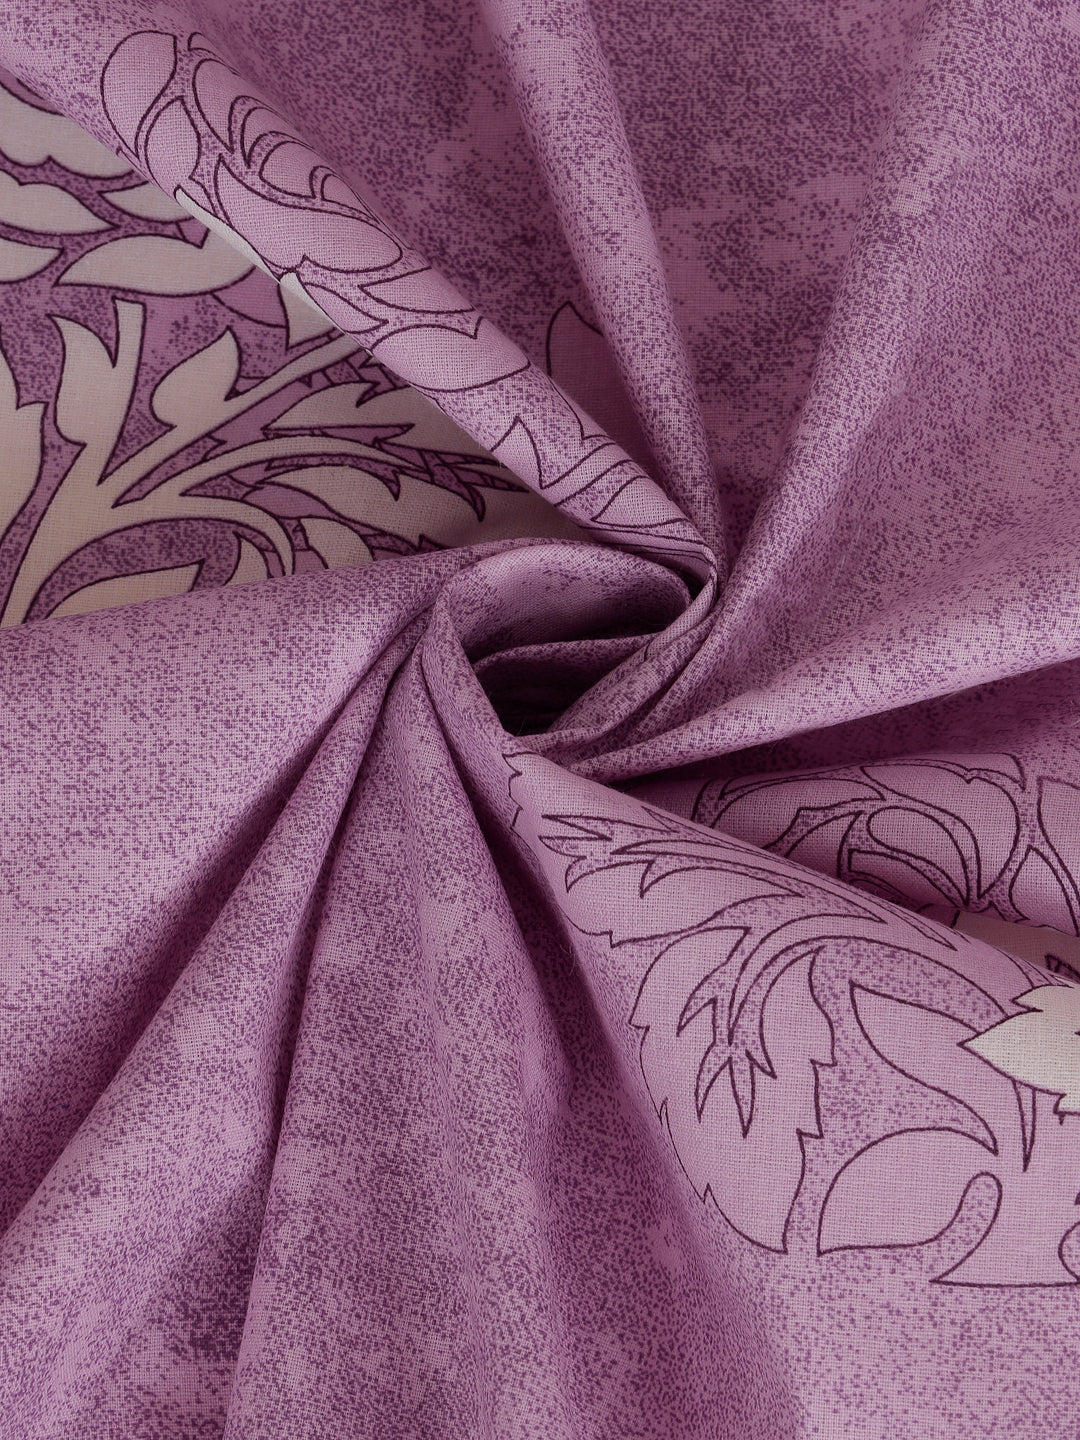 Klotthe Purple Floral 400 TC Pure Cotton Single Bedsheet with Pillow Cover